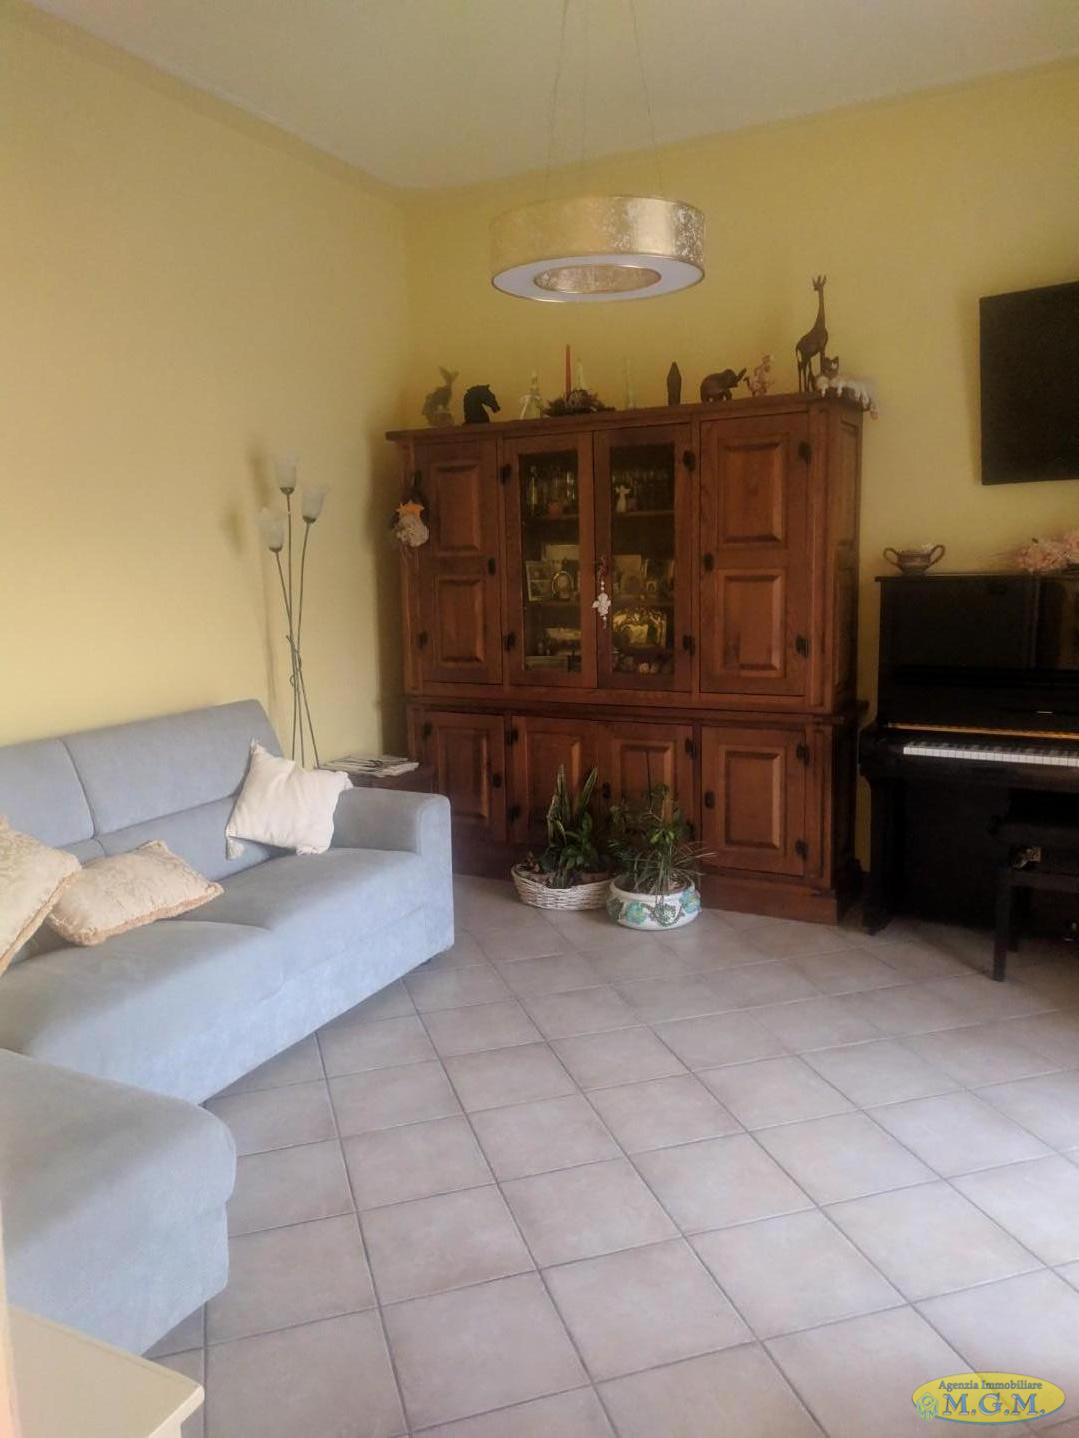 Mgmnet.it: Casa singola in vendita a Montopoli in Val d'Arno